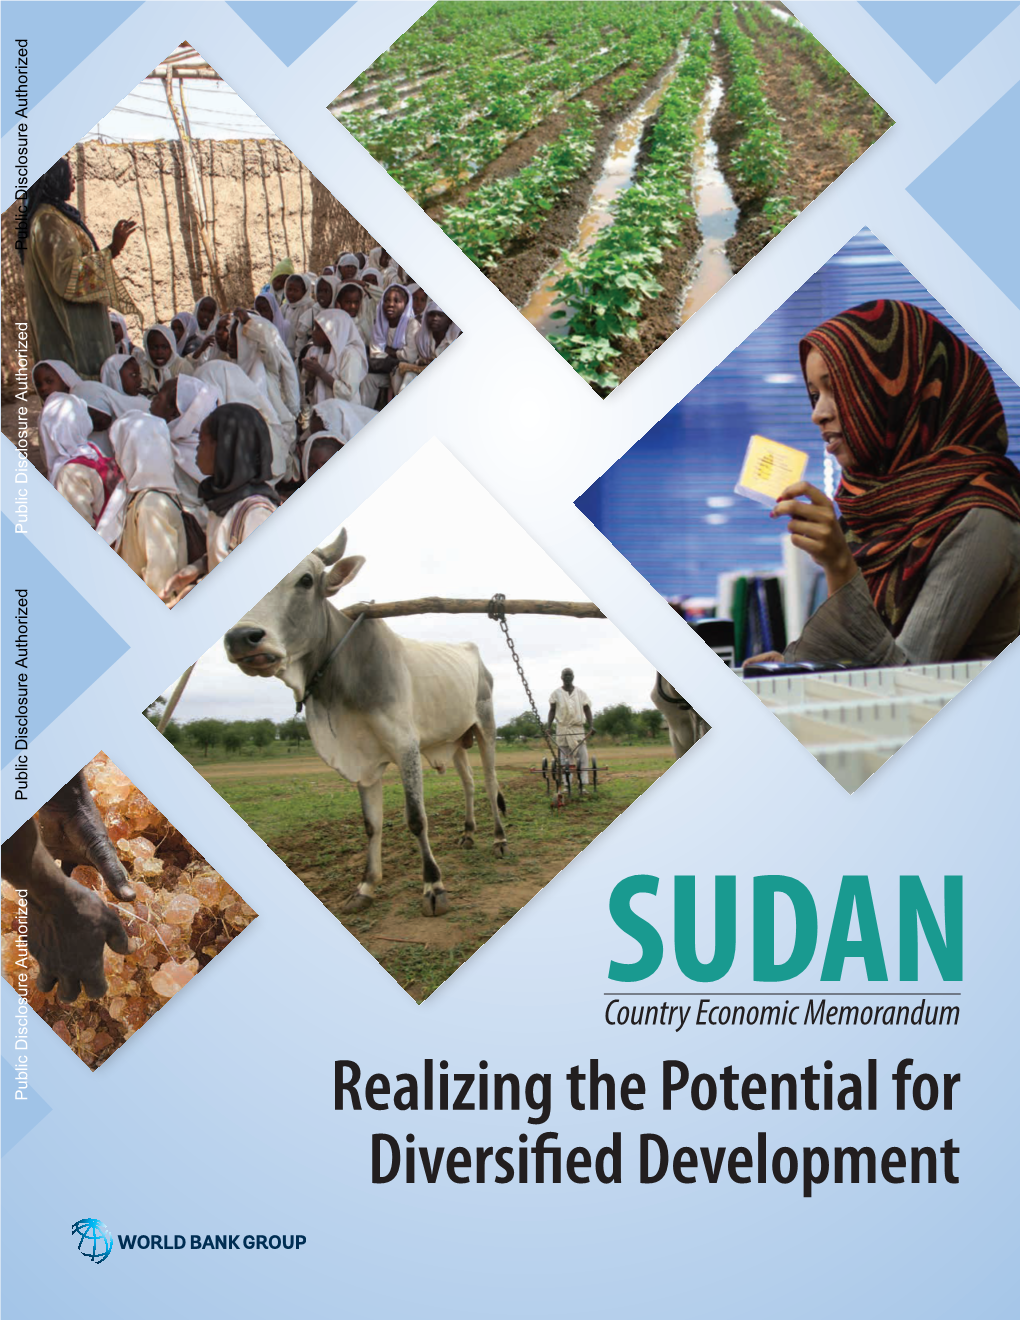 SUDAN Country Economic Memorandum